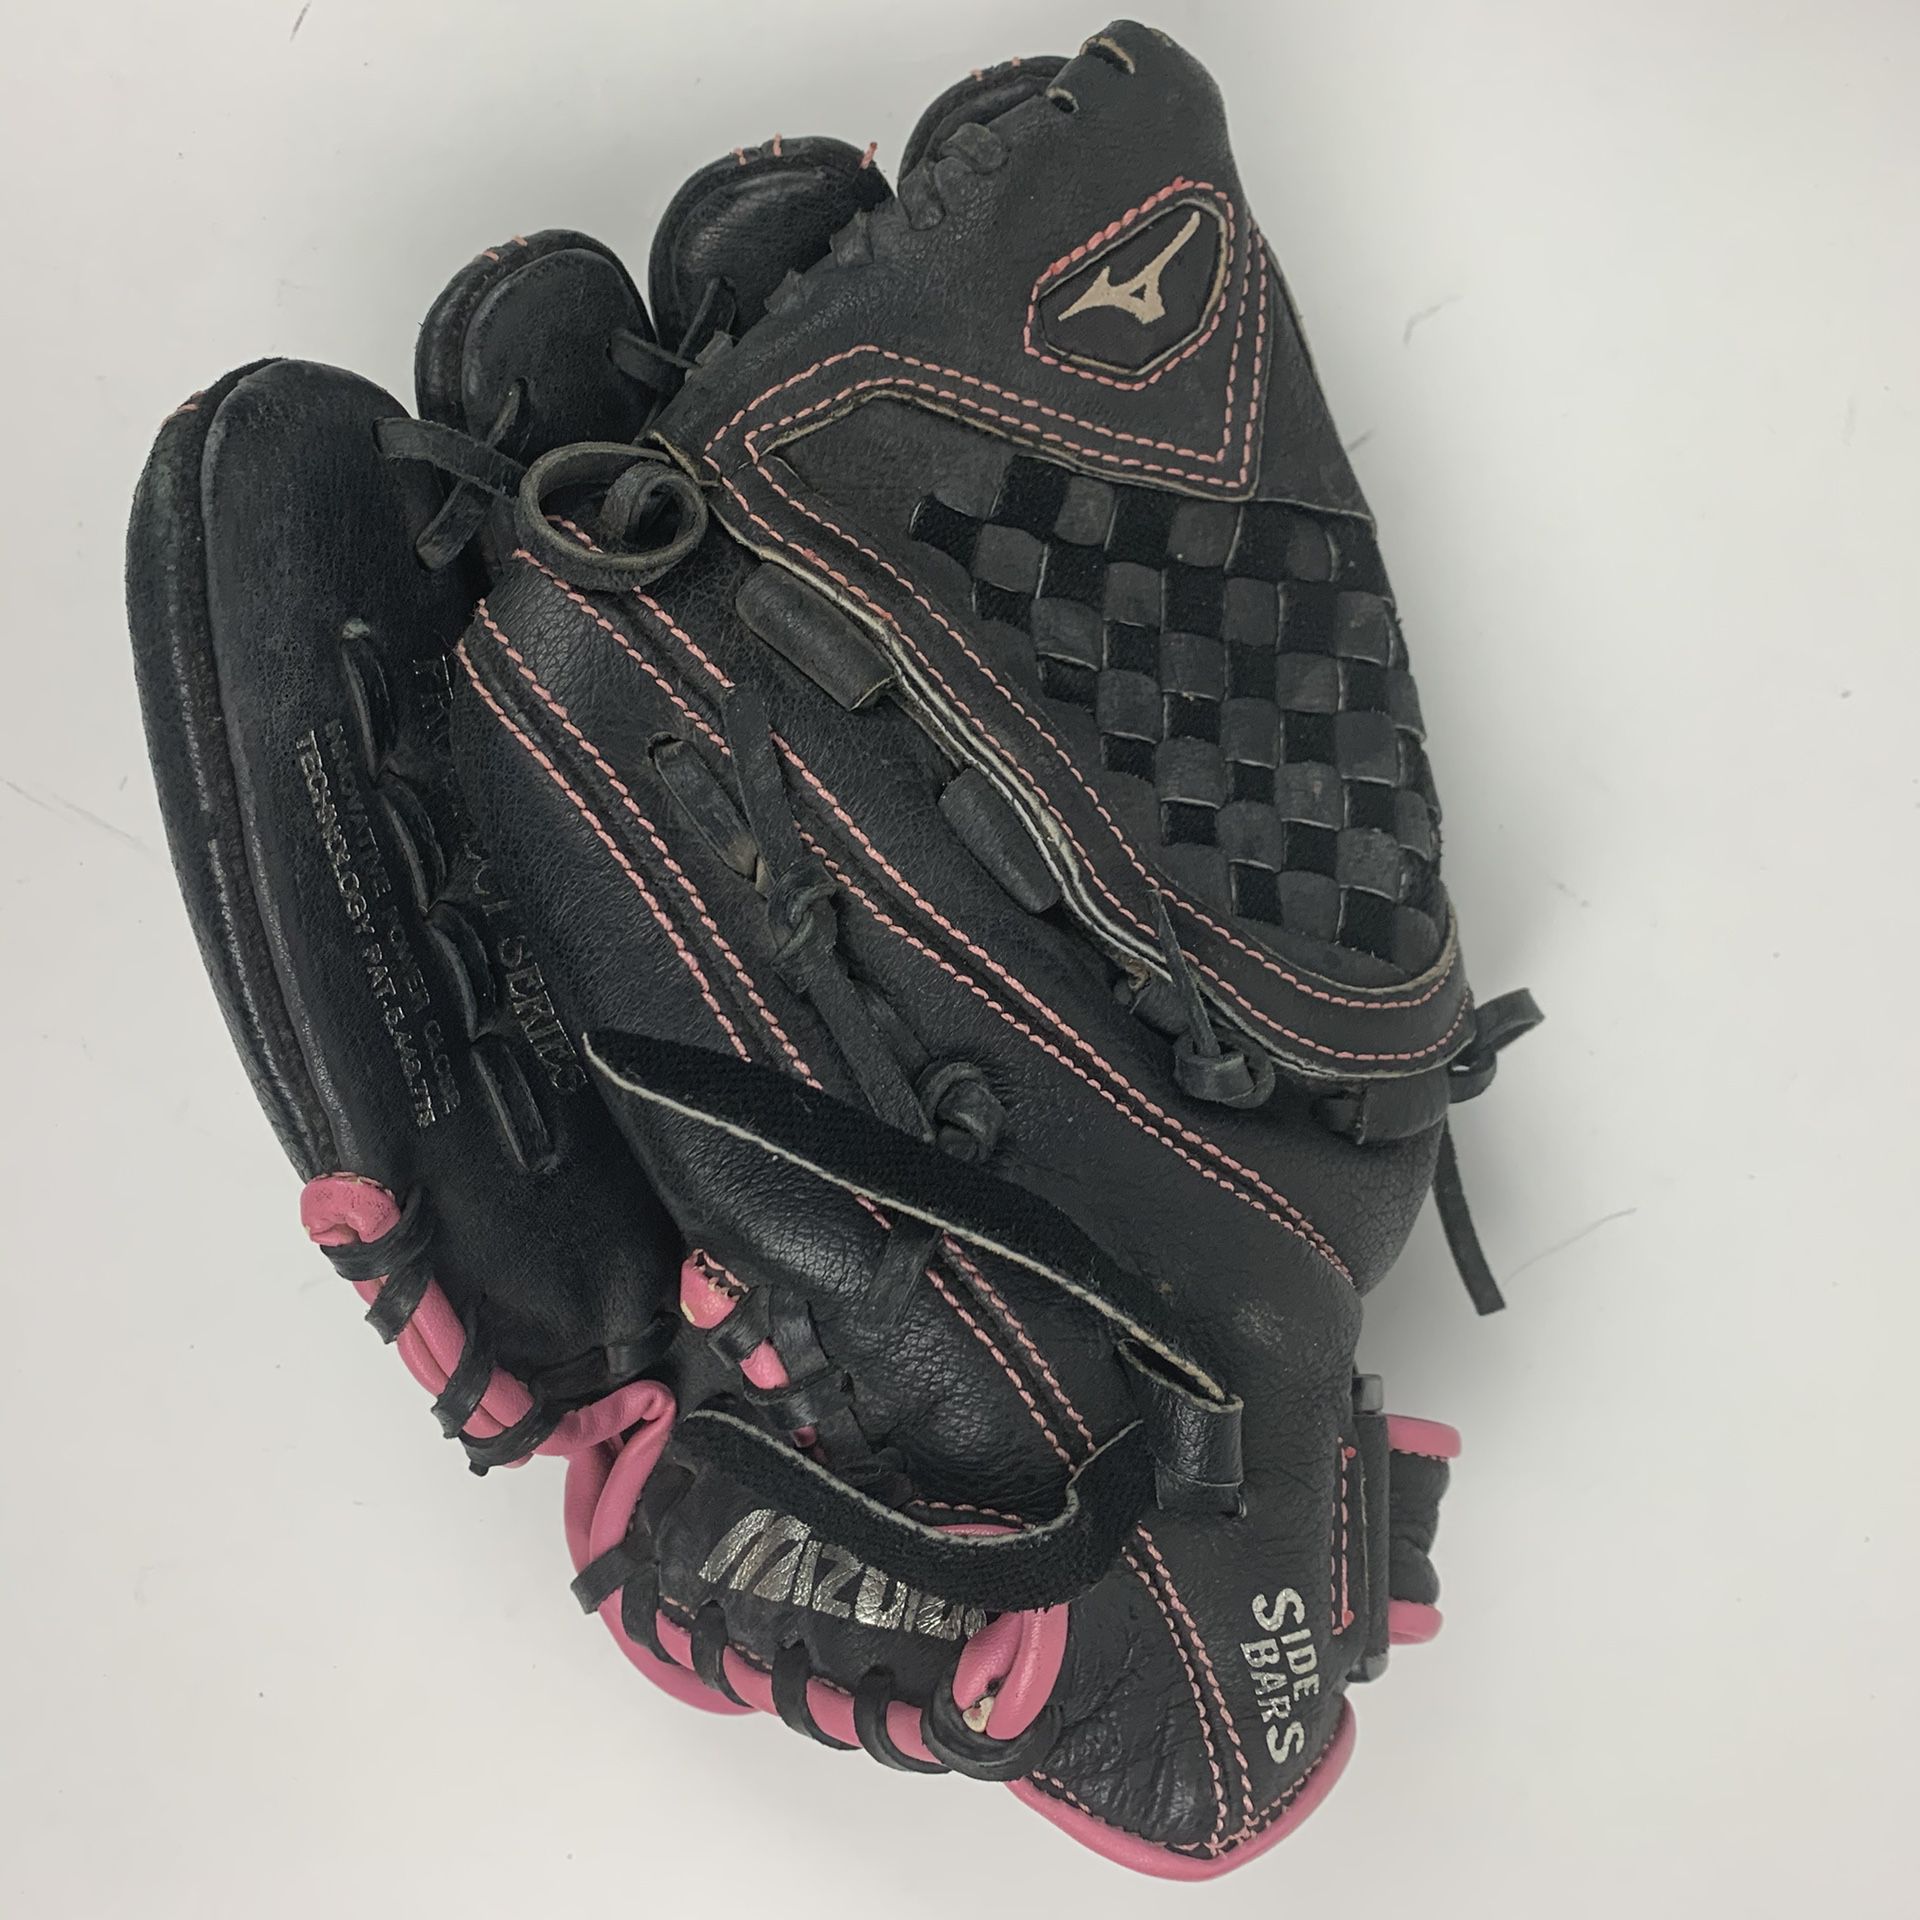 Mizuno Youth Softball / Fastpitch glove